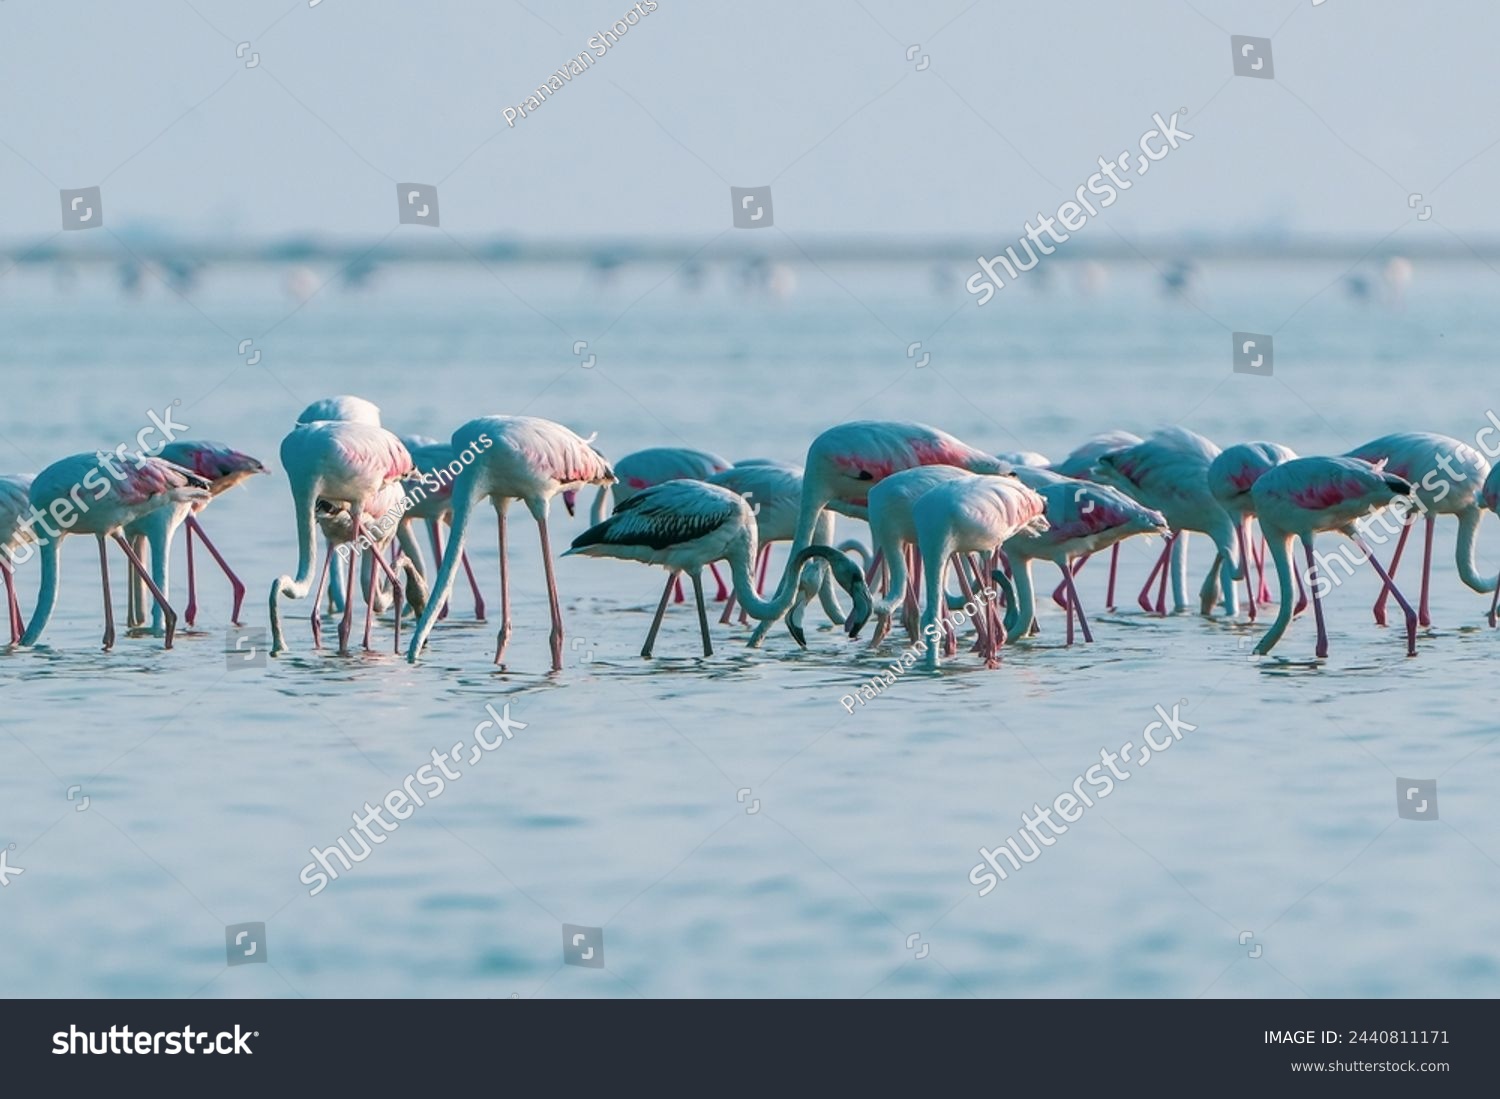 beautiful shot photograph lesser flamingos pink coloured long neck flock of birds sanctuary turquoise blue sea migratory india tamilnadu tourism wallpaper background empty space silhouettes graceful #2440811171